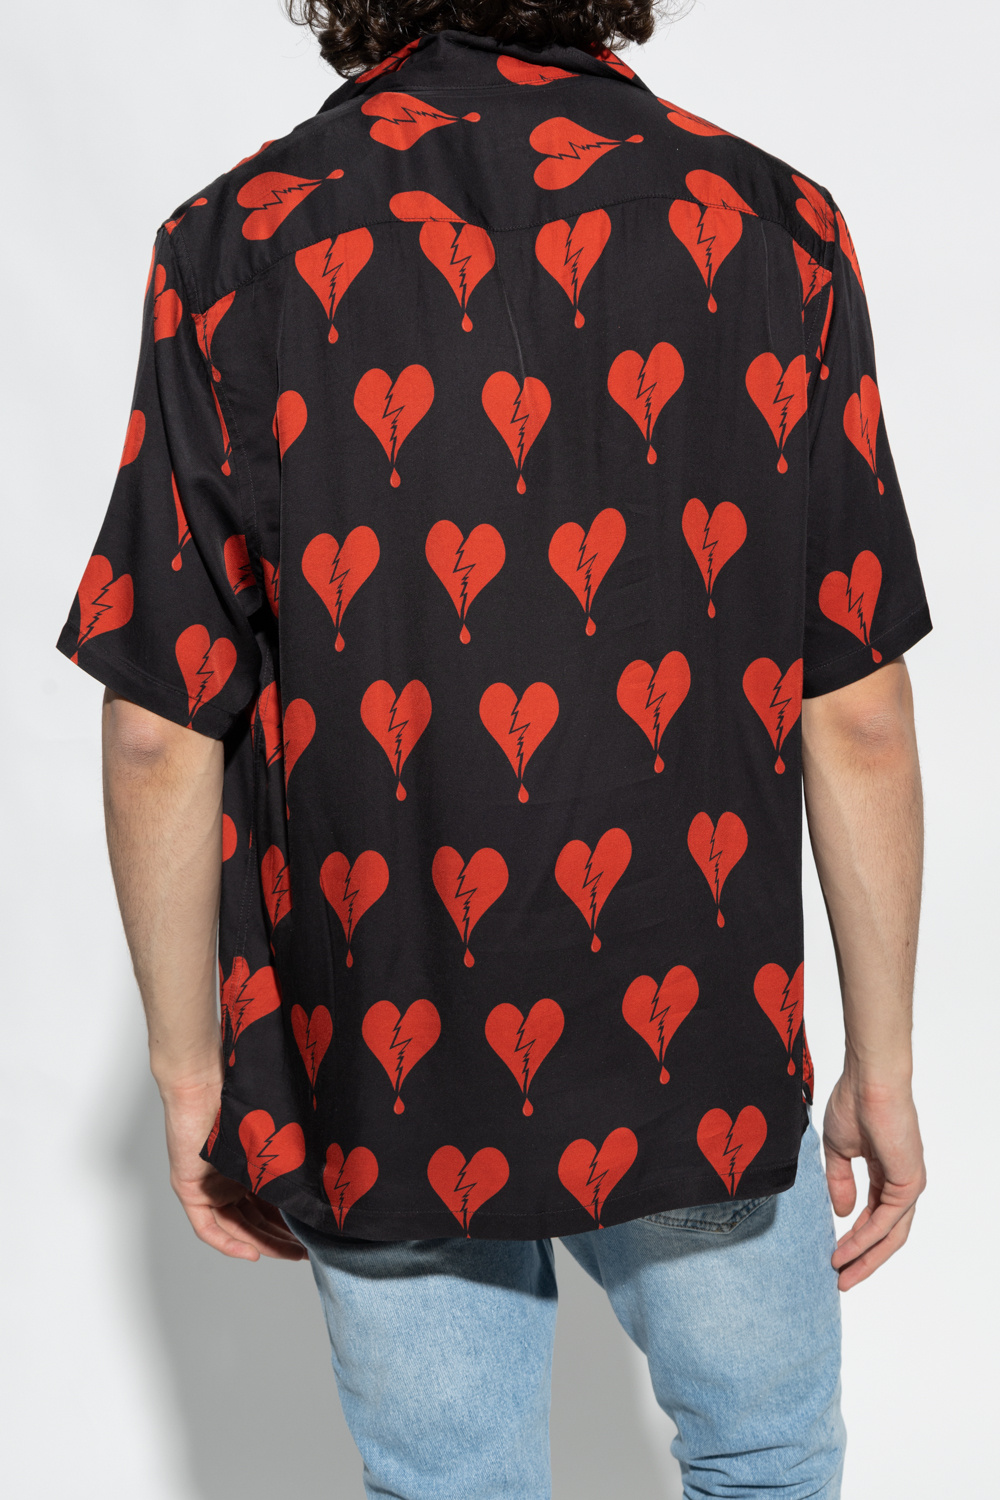 AllSaints 'Breakup' shirt with heart motif | Men's Clothing | Vitkac